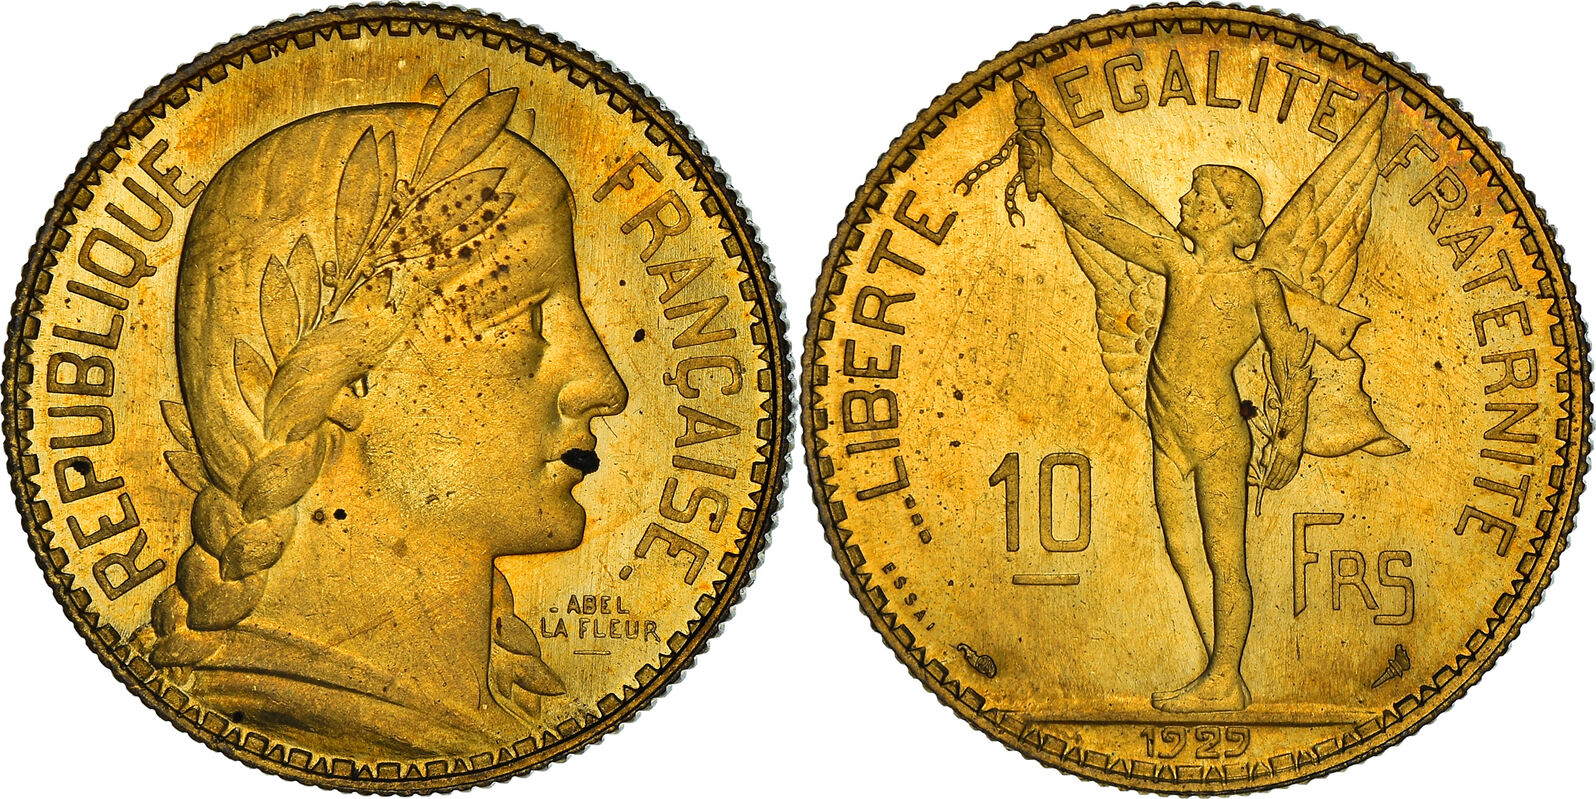 French 10. 10 Francs. Доллар 1929 монета. Morocco 5 Francs 1929. Morocco 10 Francs - Mohammed v (essai) ND (1928).